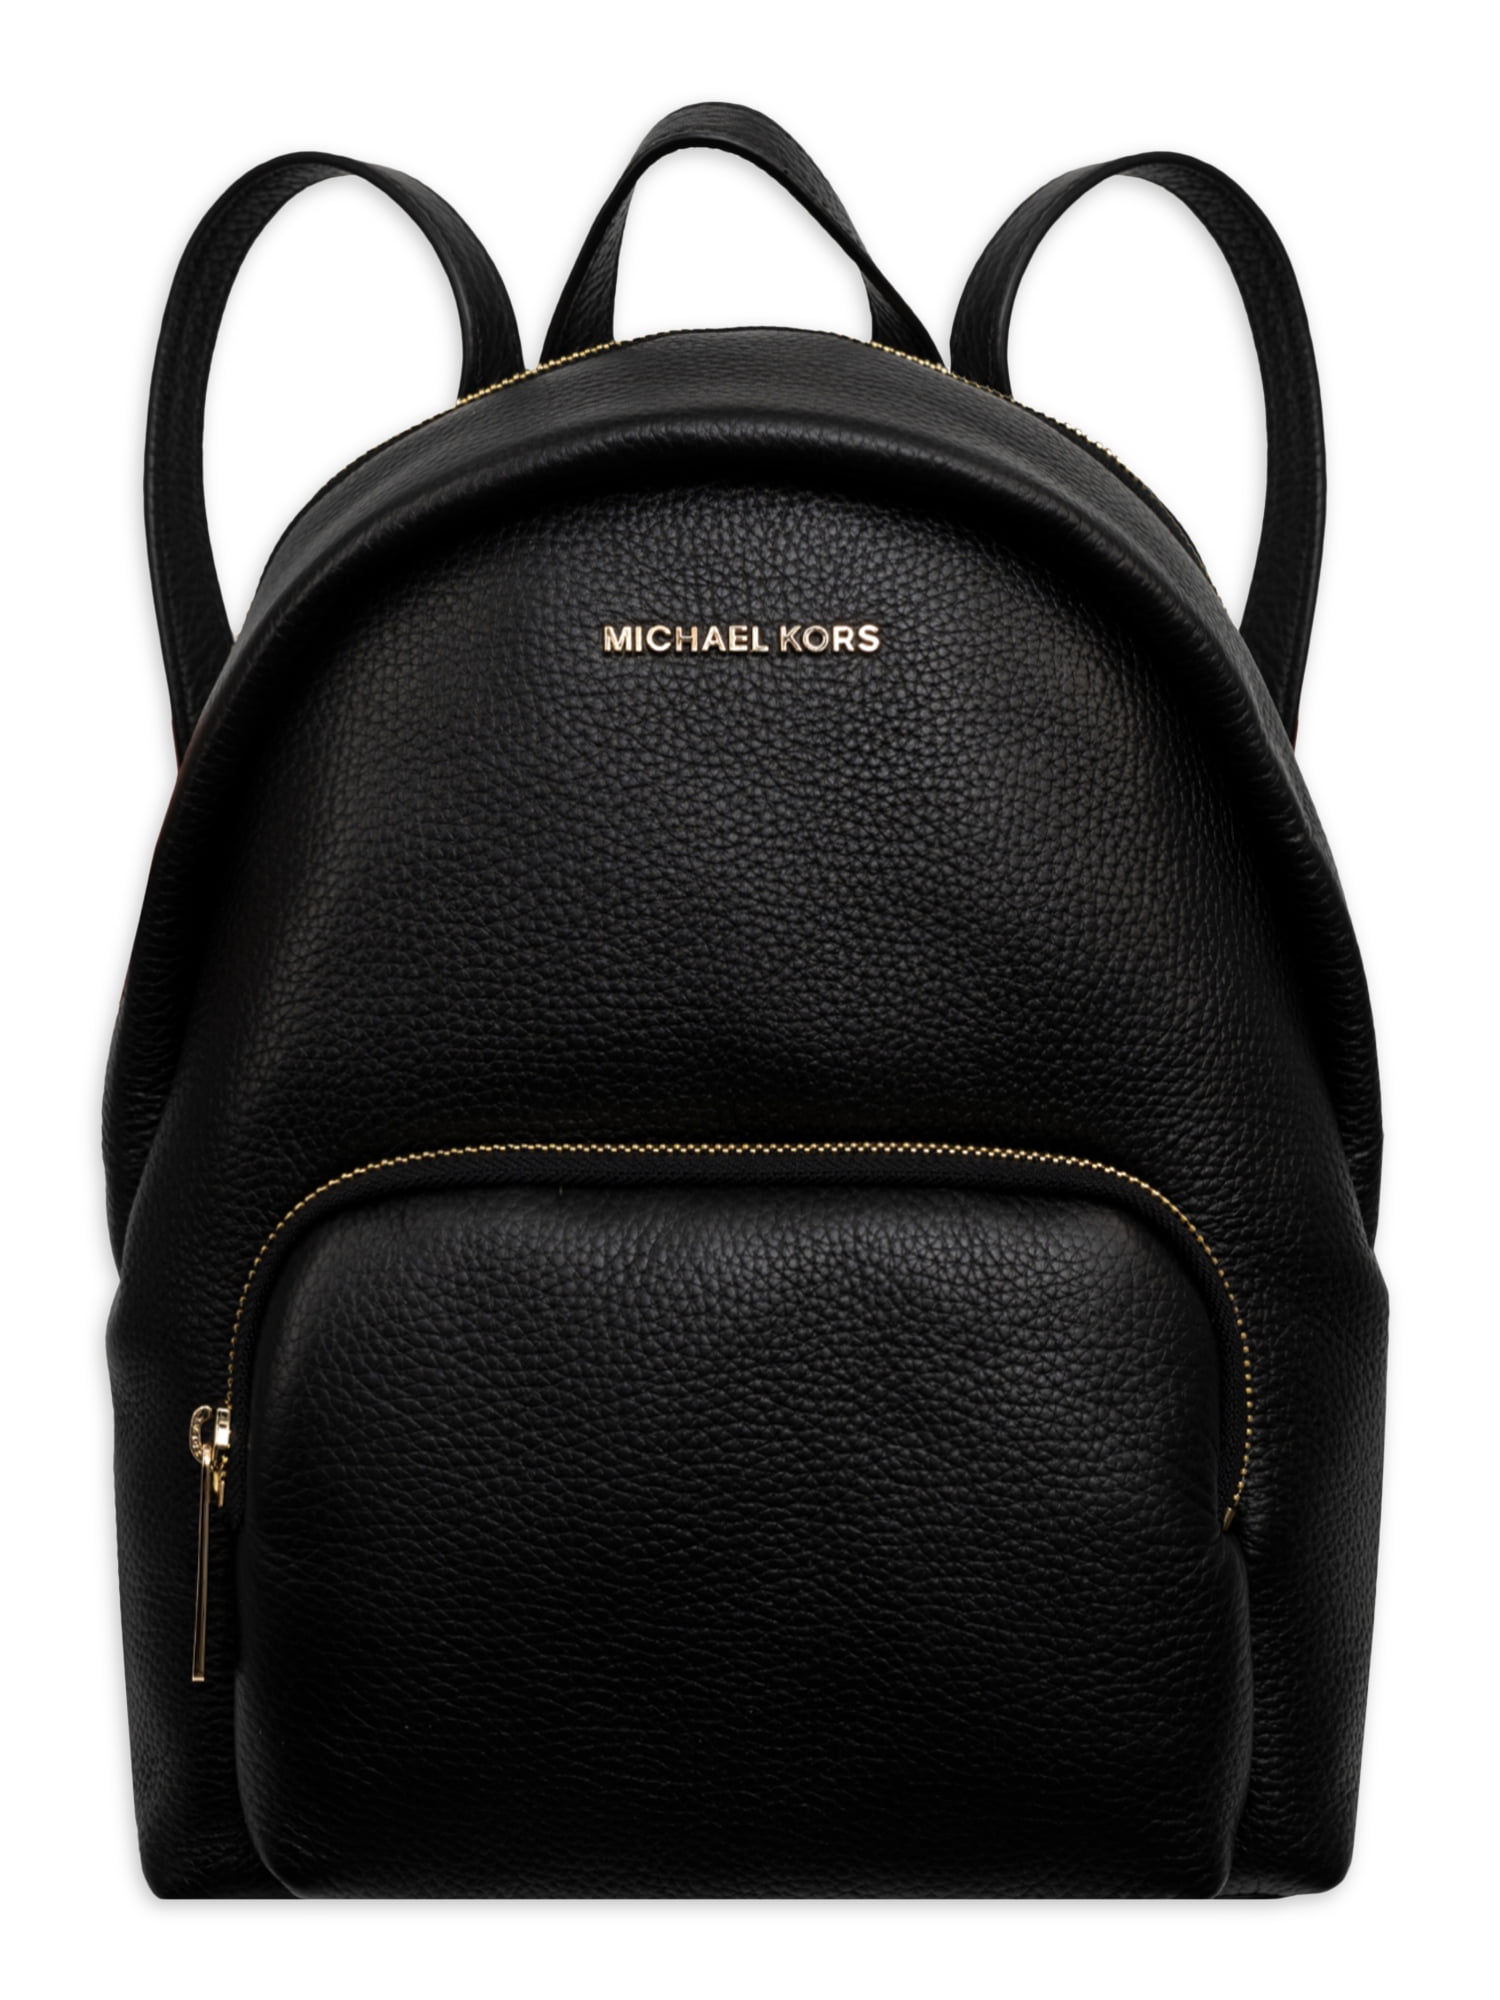 Michael Kors Women's Erin Medium Pebbled Leather Backpack - Black -  